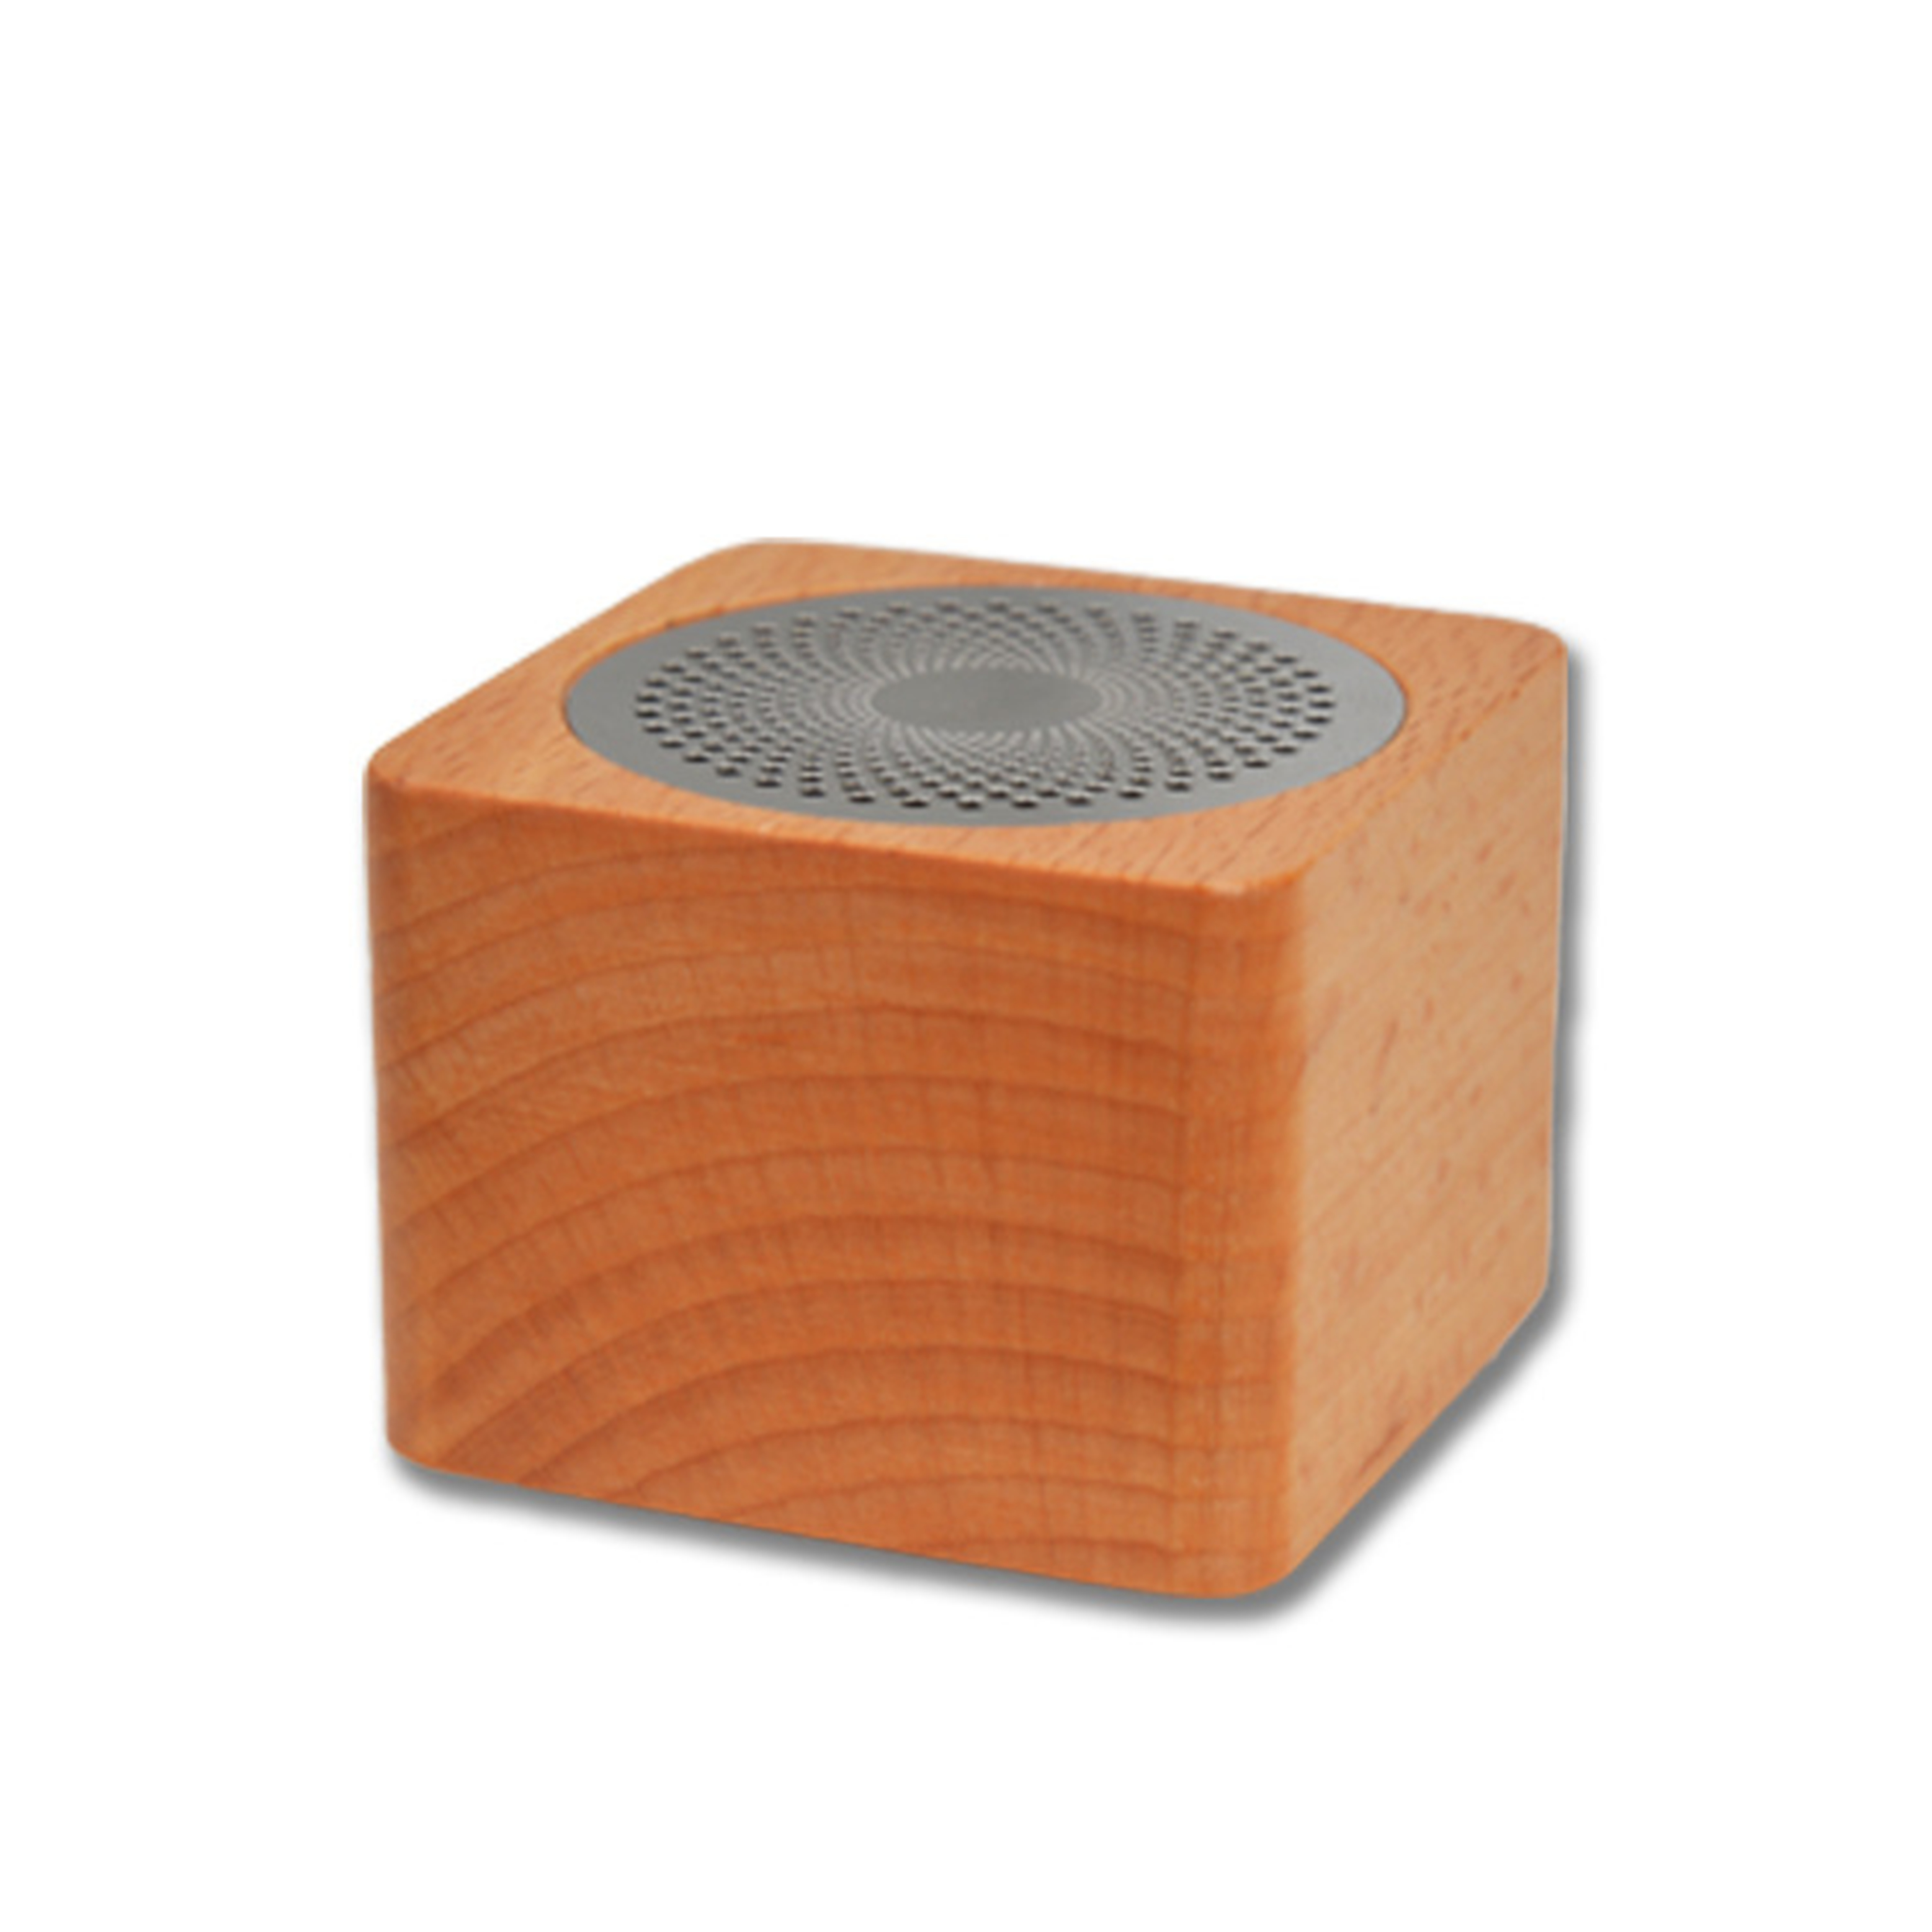 CY-14 mini square Bluetooth speaker